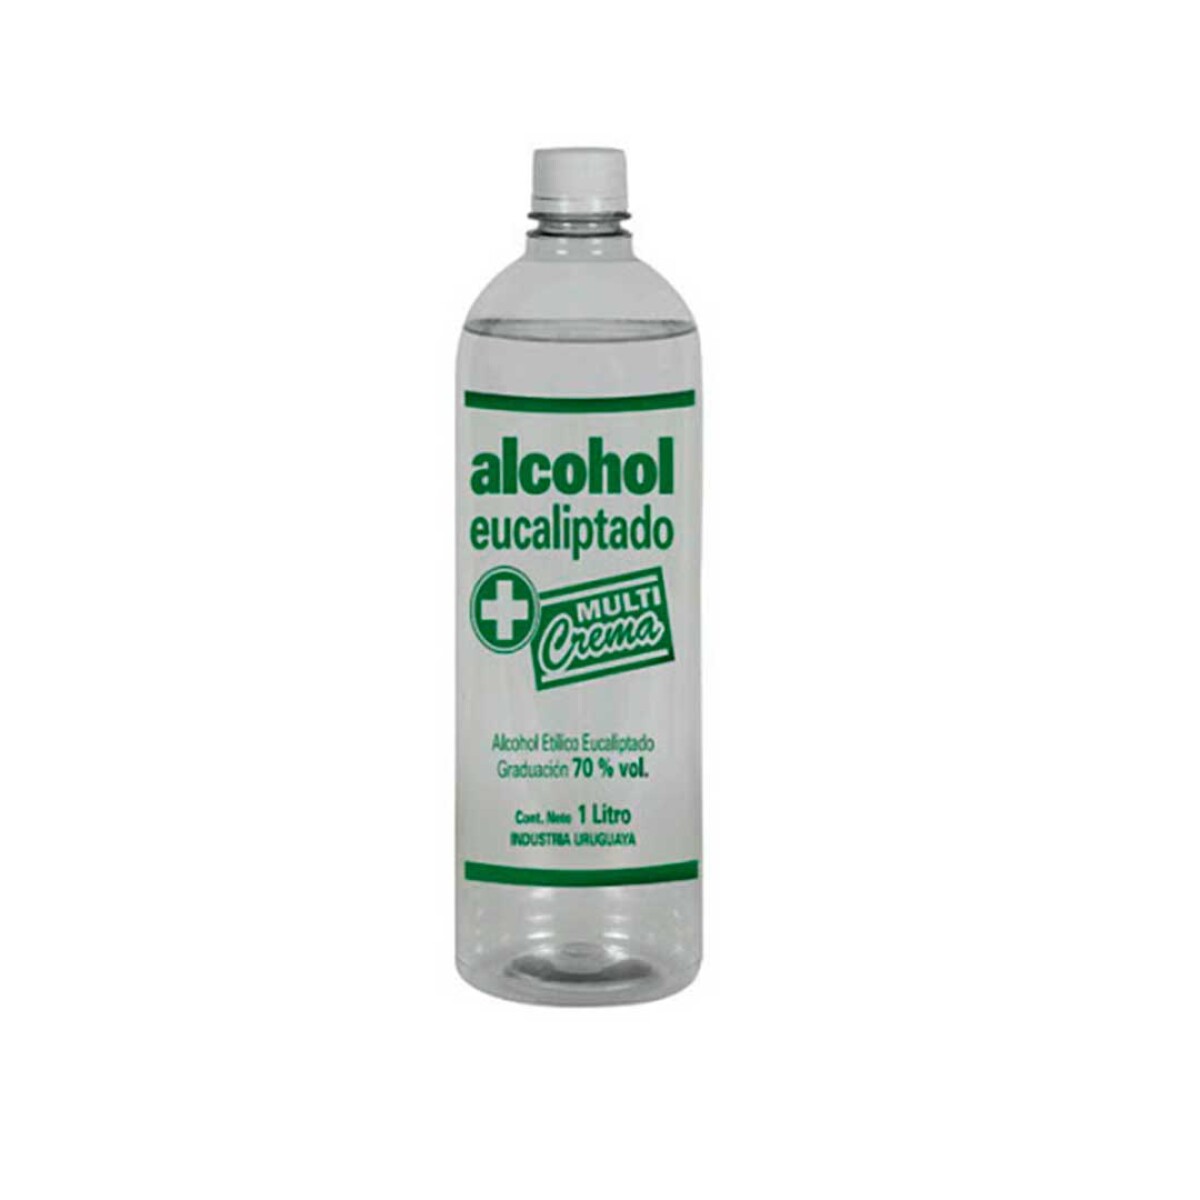 Alcohol Etilico Eucaliptado Multi Crema 1lt 70% msp - 001 